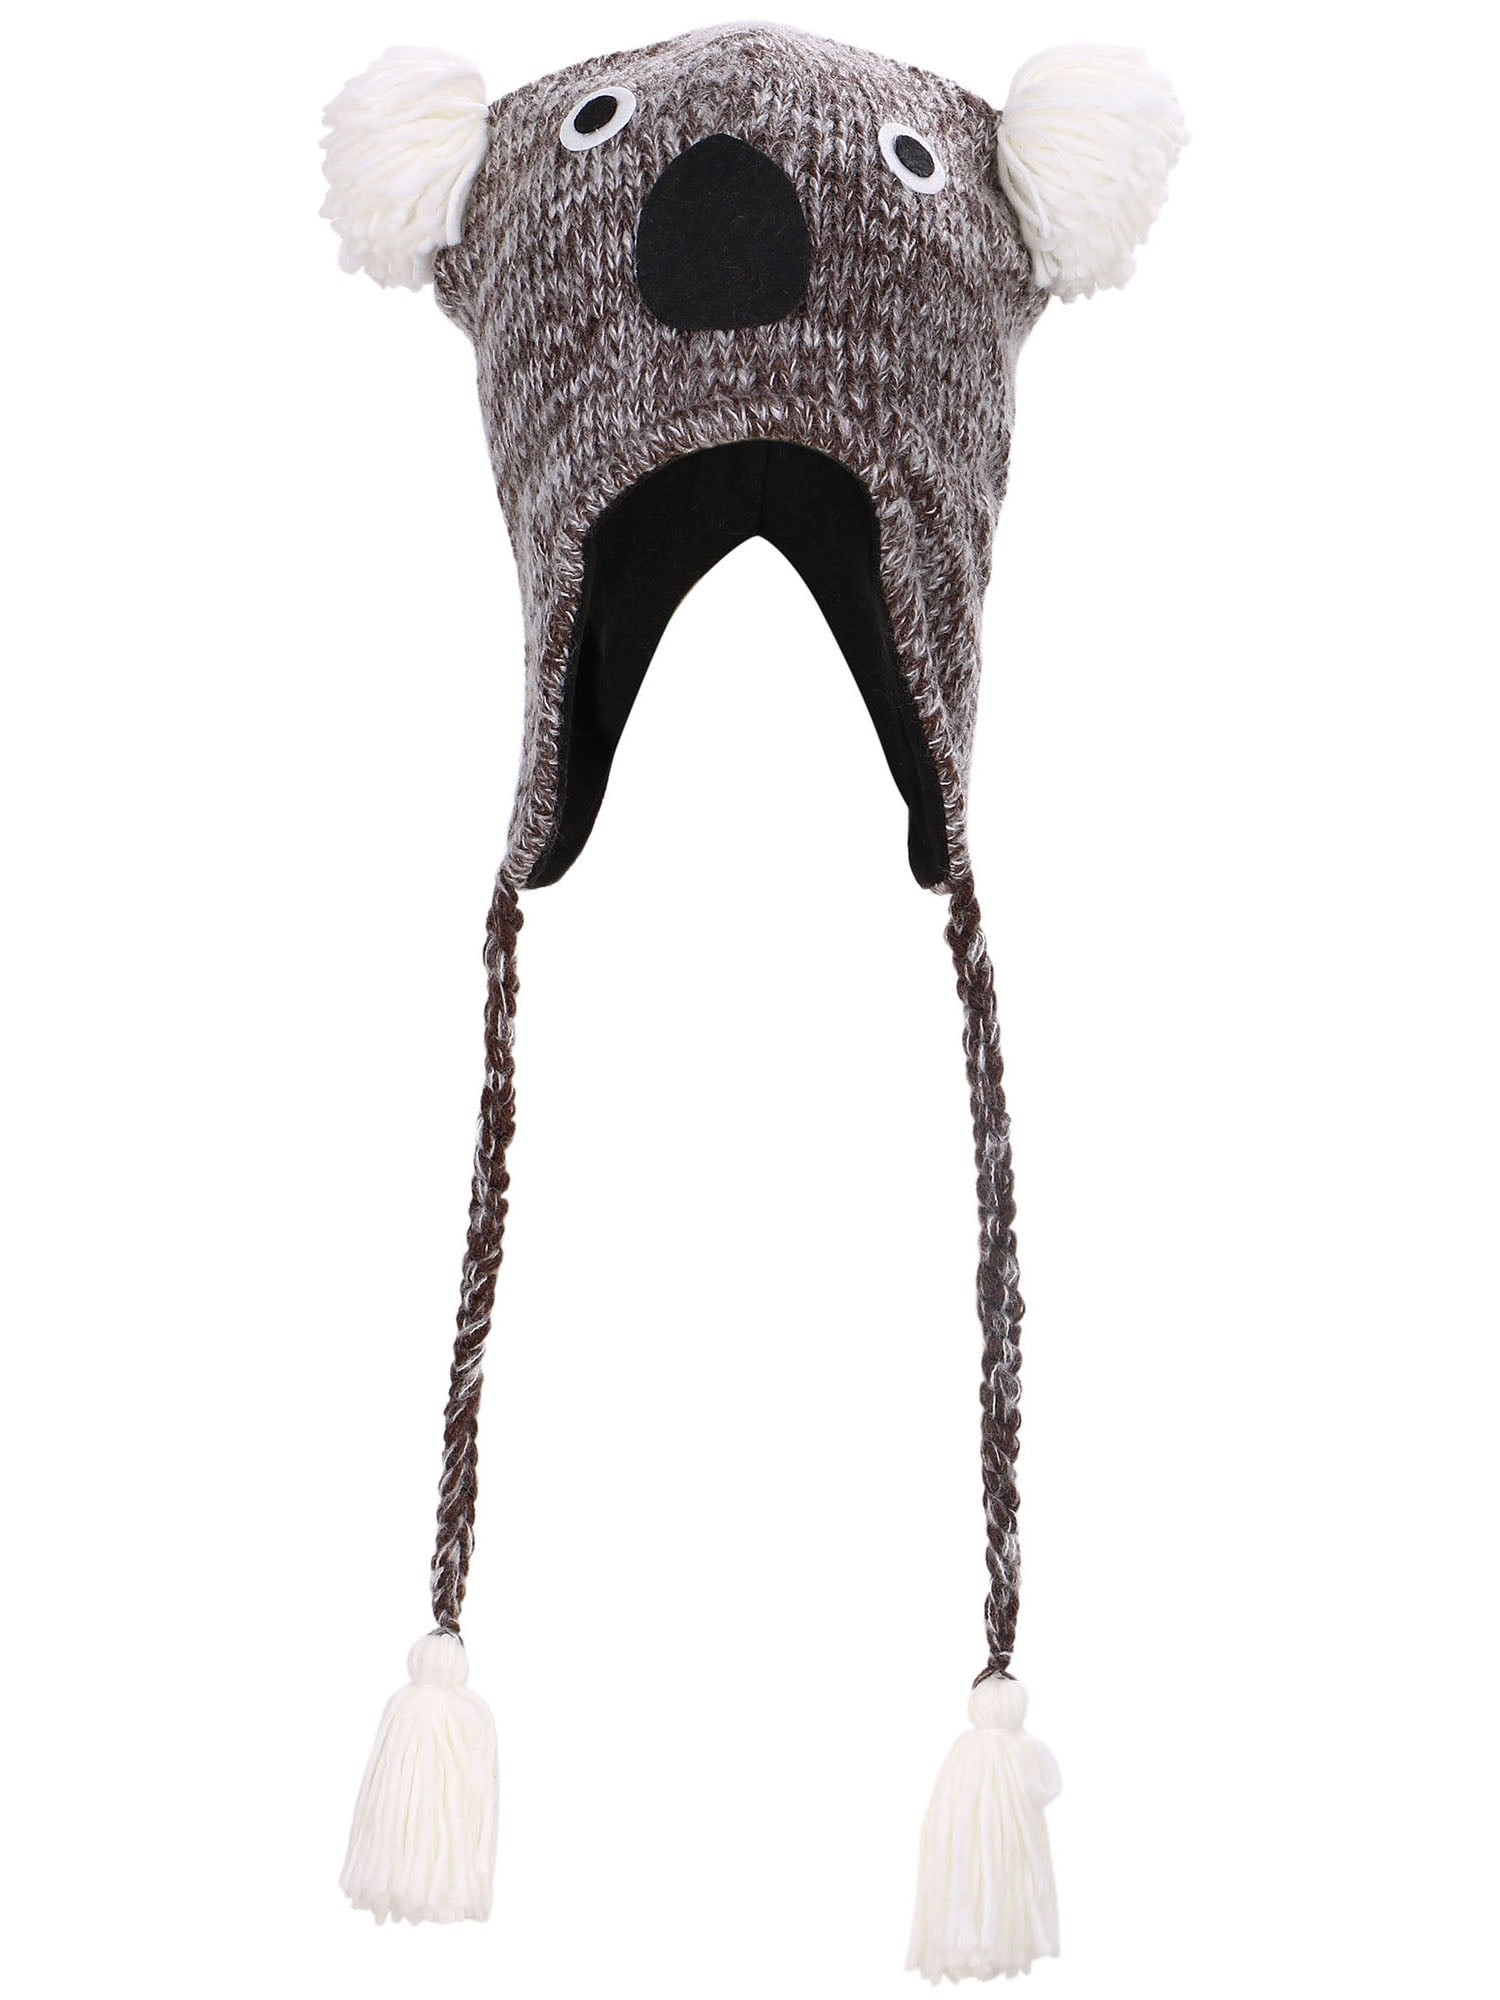 deLux classic KOALA HAT & MITTENS SET knit ADULT costume animal LINED men women 